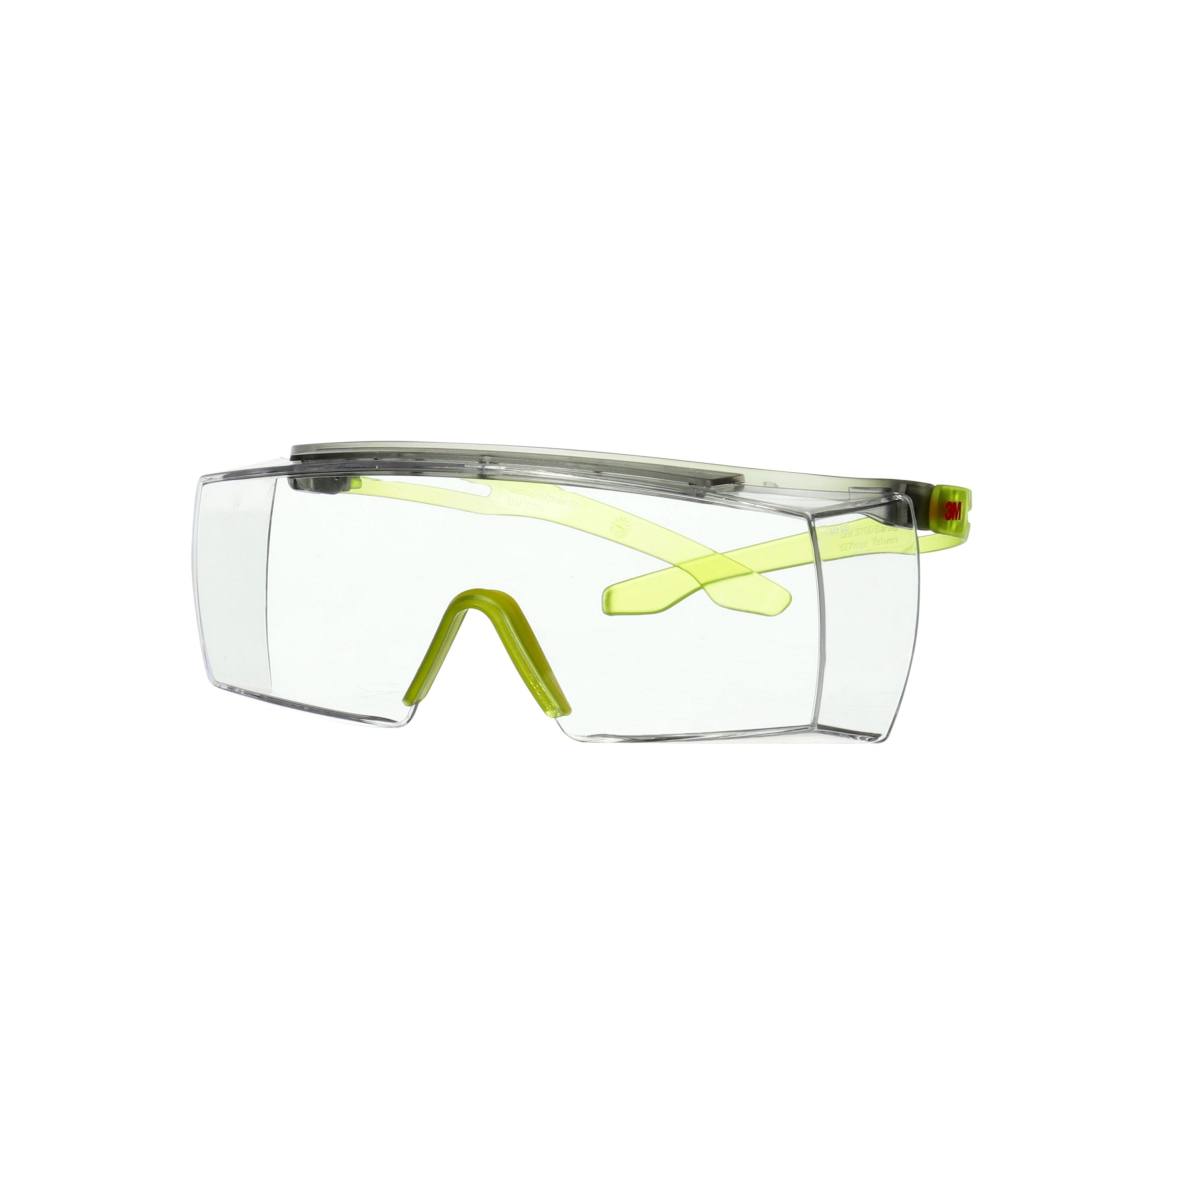 3M SecureFit 3700 over spectacles, lime green temples, Scotchgard anti-fog coating (K&amp;N), clear lens, angle-adjustable, SF3701SGAF-GRN-EU